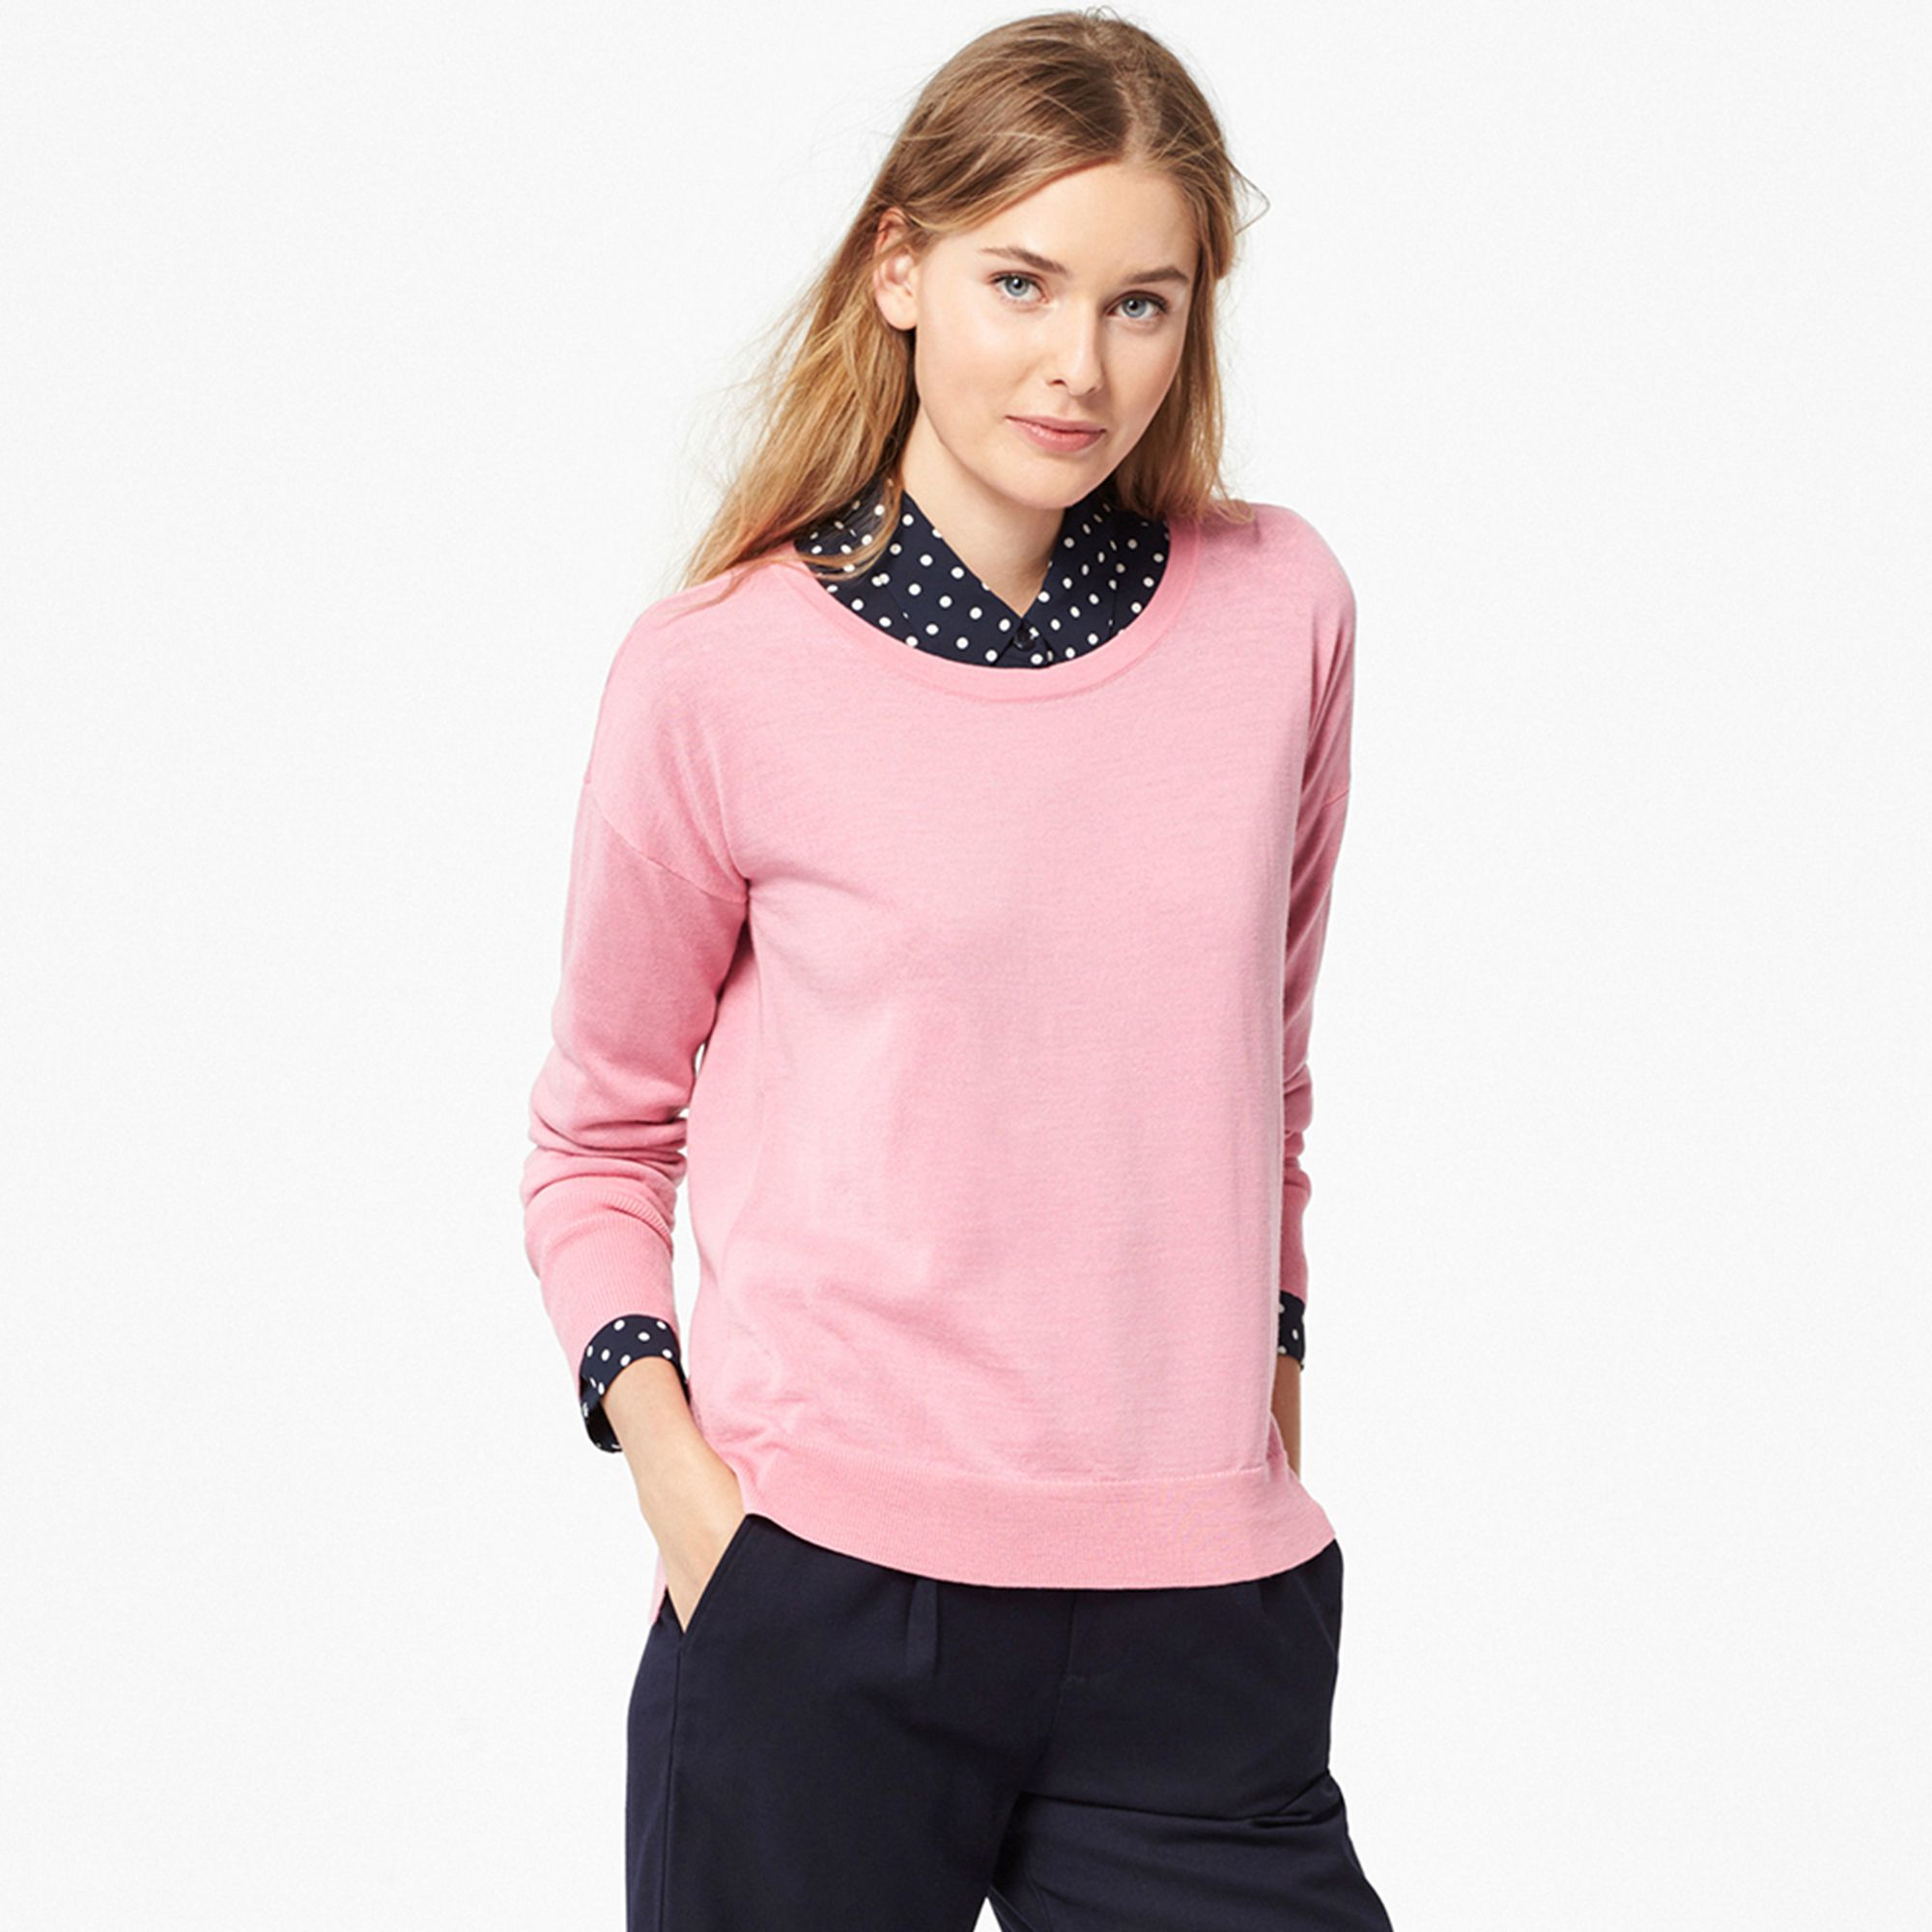 Uniqlo Women Extra Fine Merino Crew Neck Sweater in Pink | Lyst